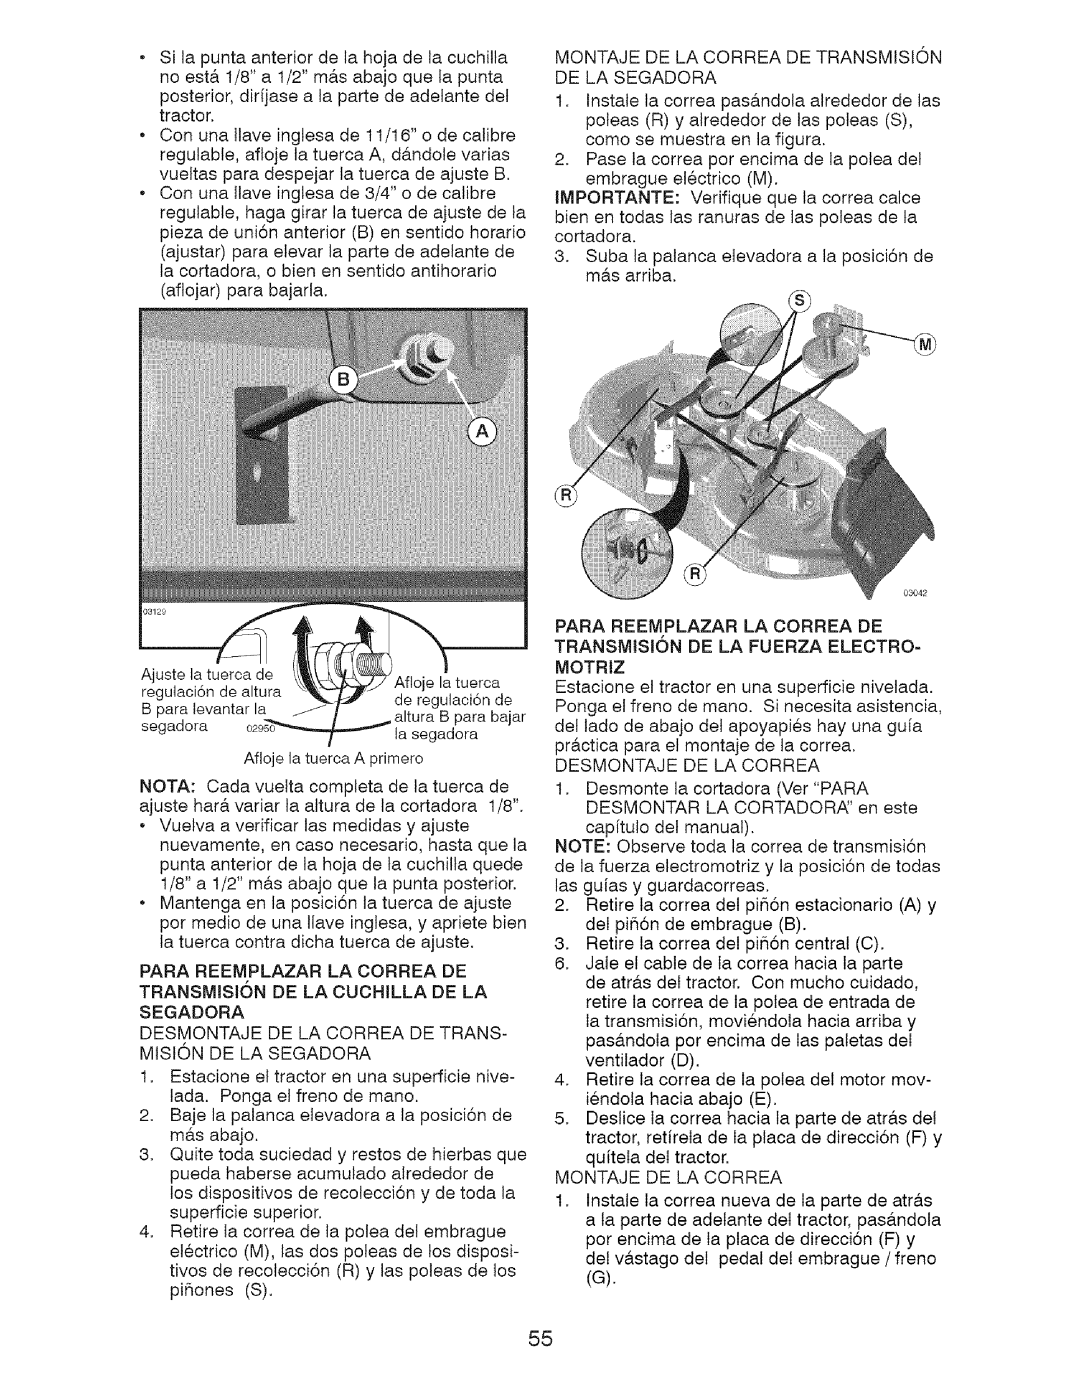 Craftsman 917.28726 owner manual Montaje De La Correa De Transmision De La Segadora 